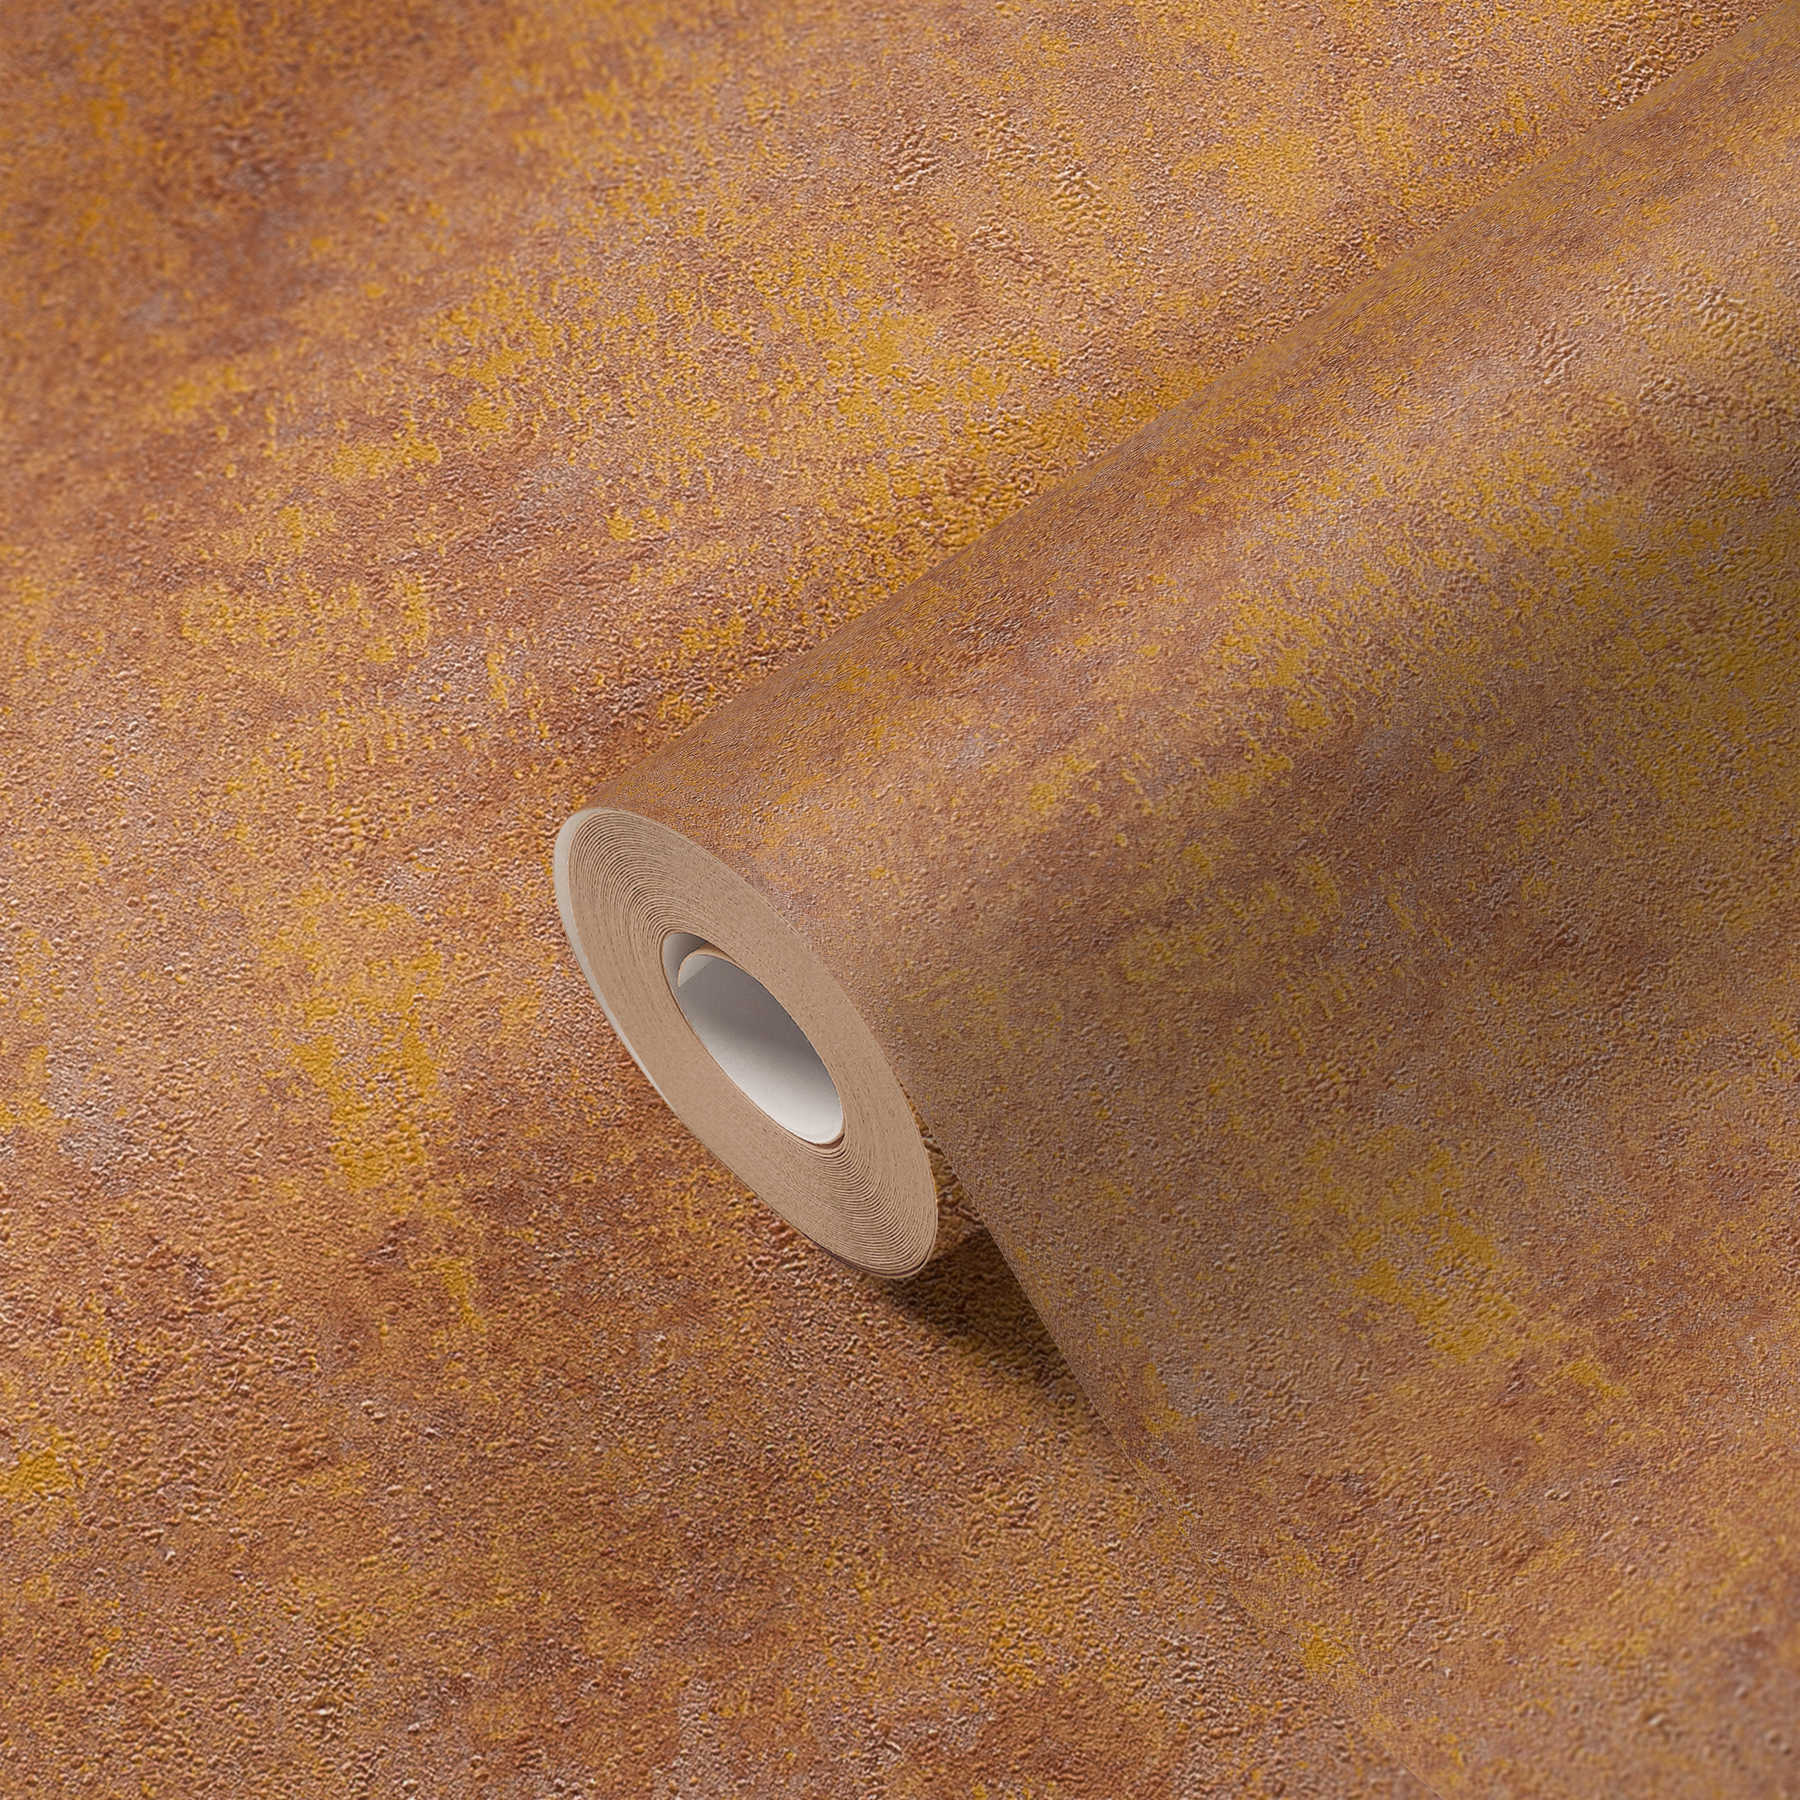             Vliesbehang roestlook met glanseffect - oranje, koper, bruin
        